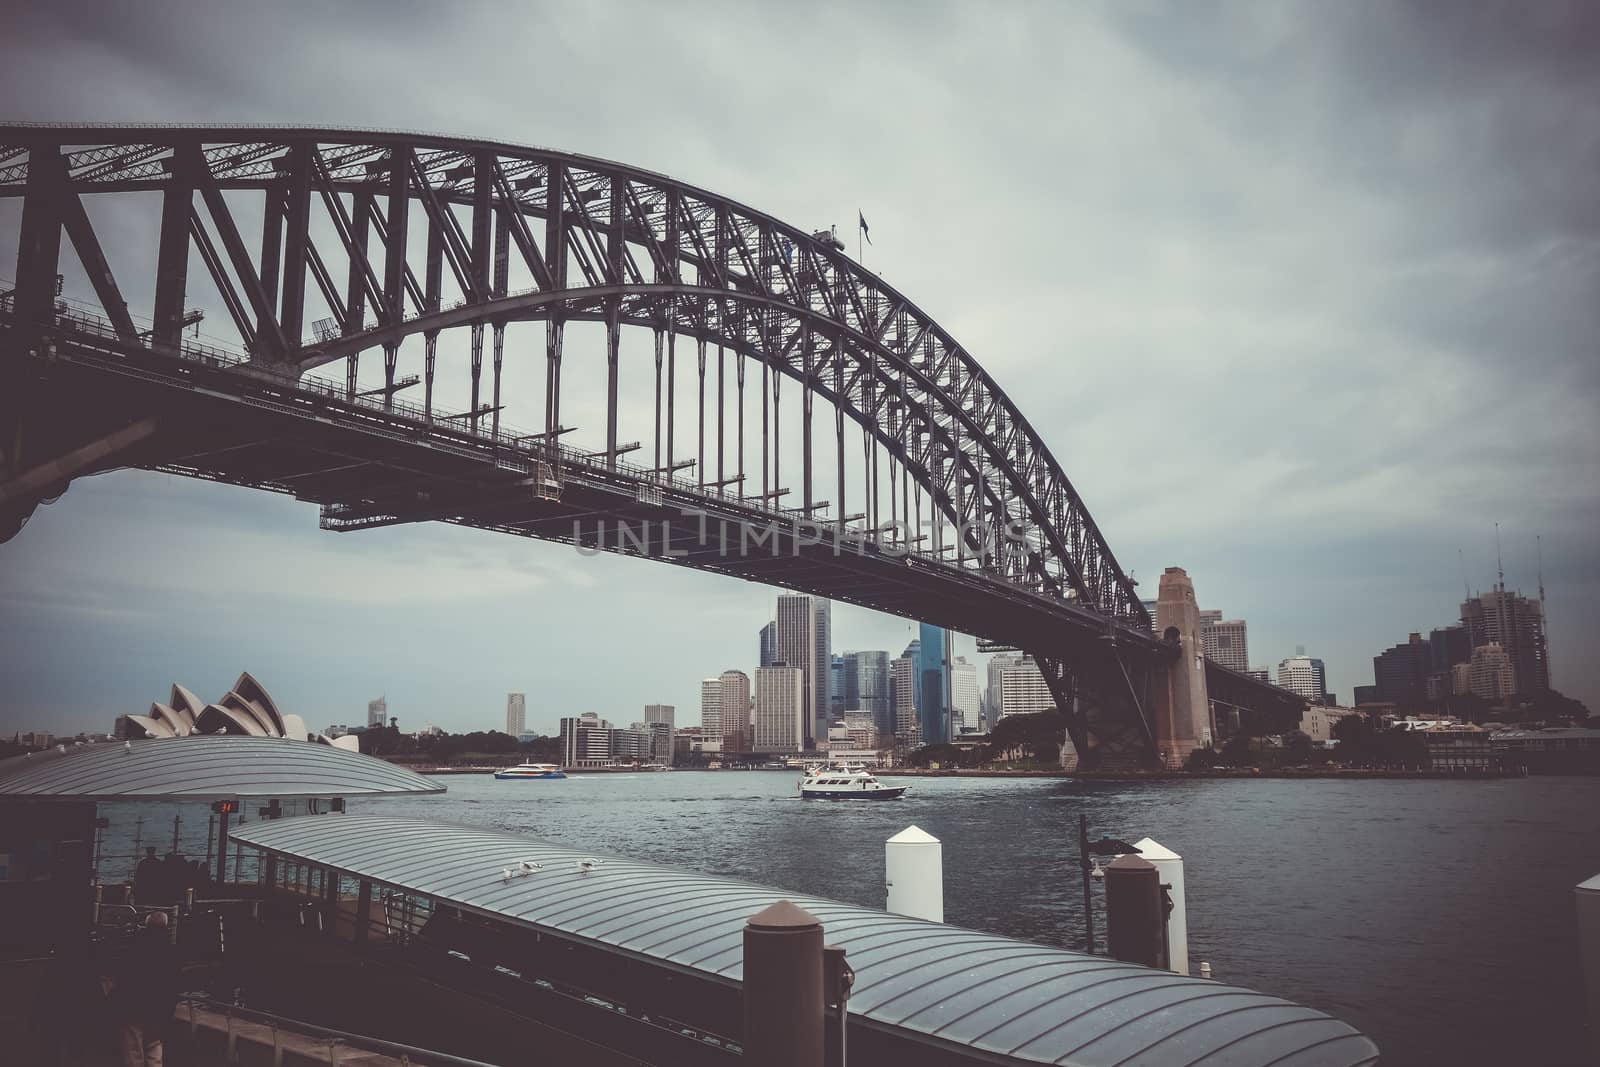 Sydney Harbour Bridge and boat cityscape, Australia